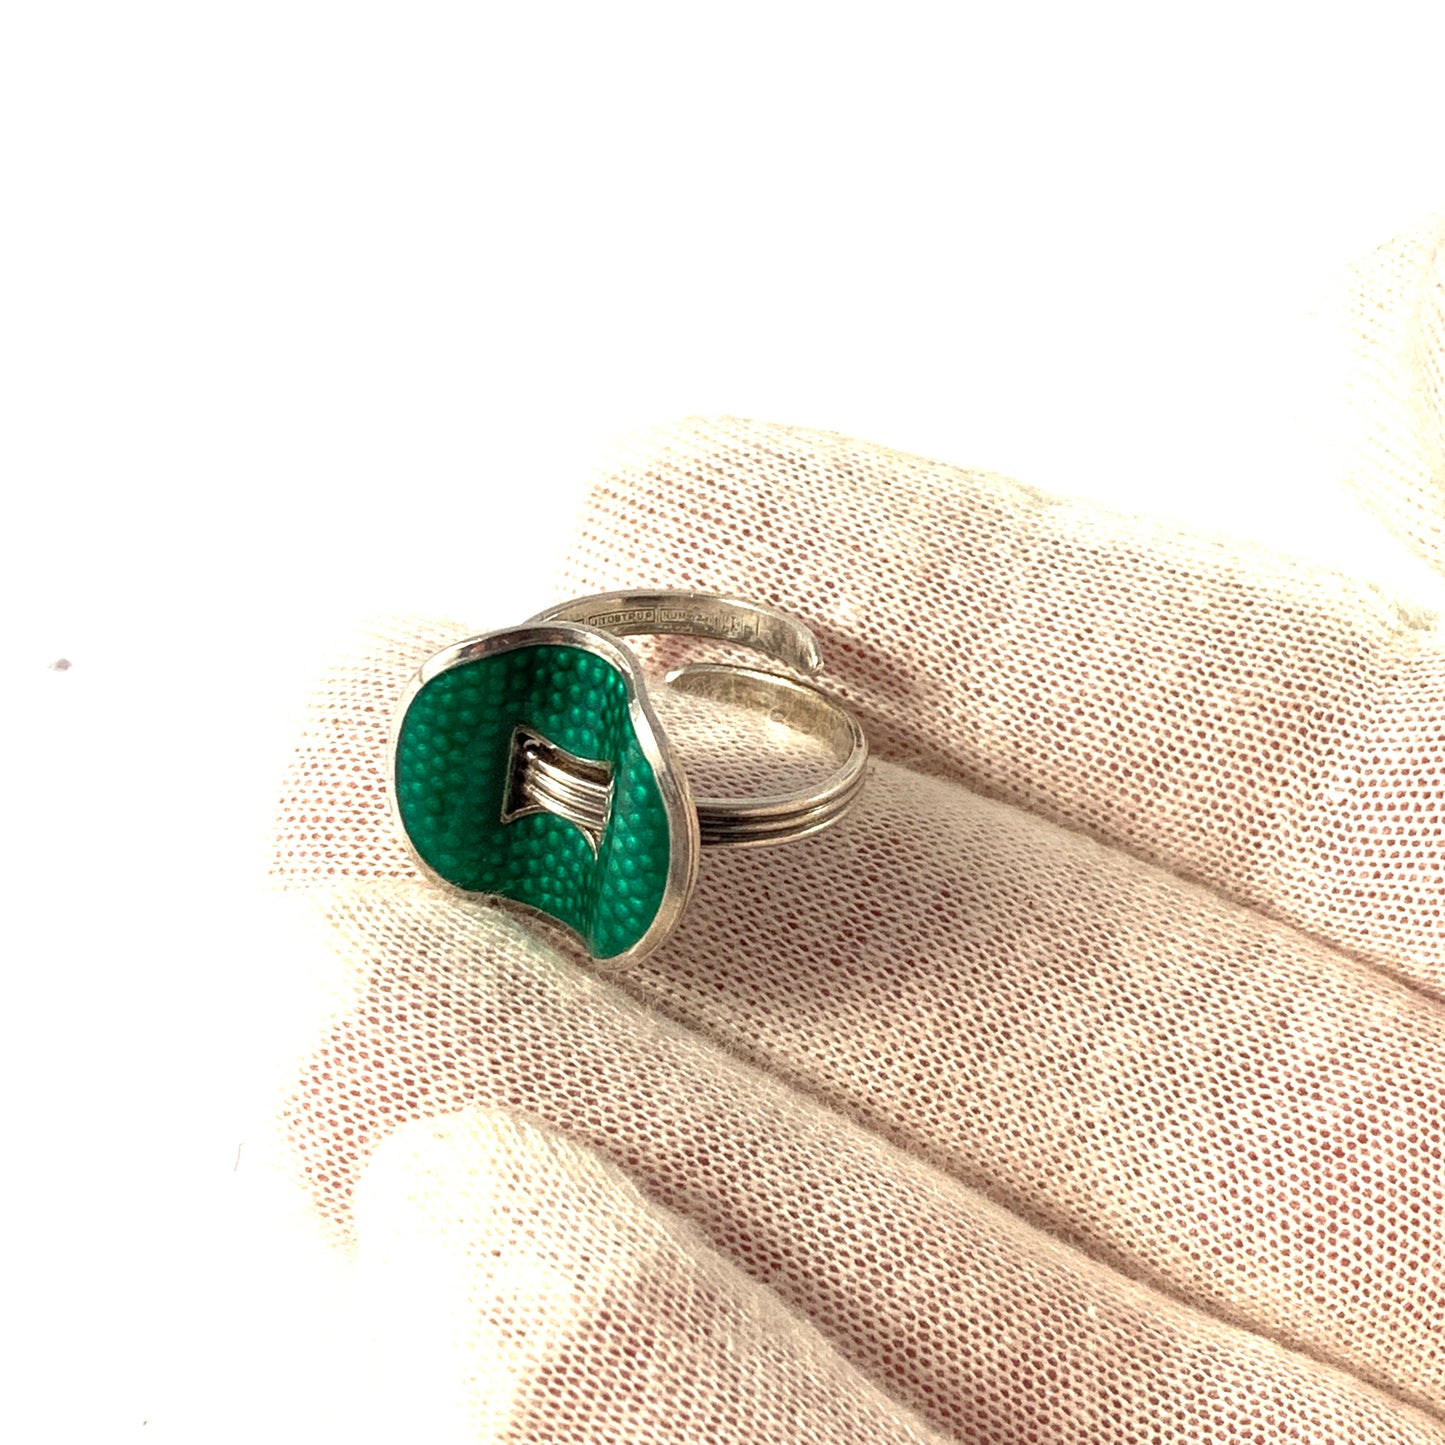 Grete Prytz Kittelsen for J. Tostrup, Norway. Vintage Sterling Silver Green Enamel Ring.